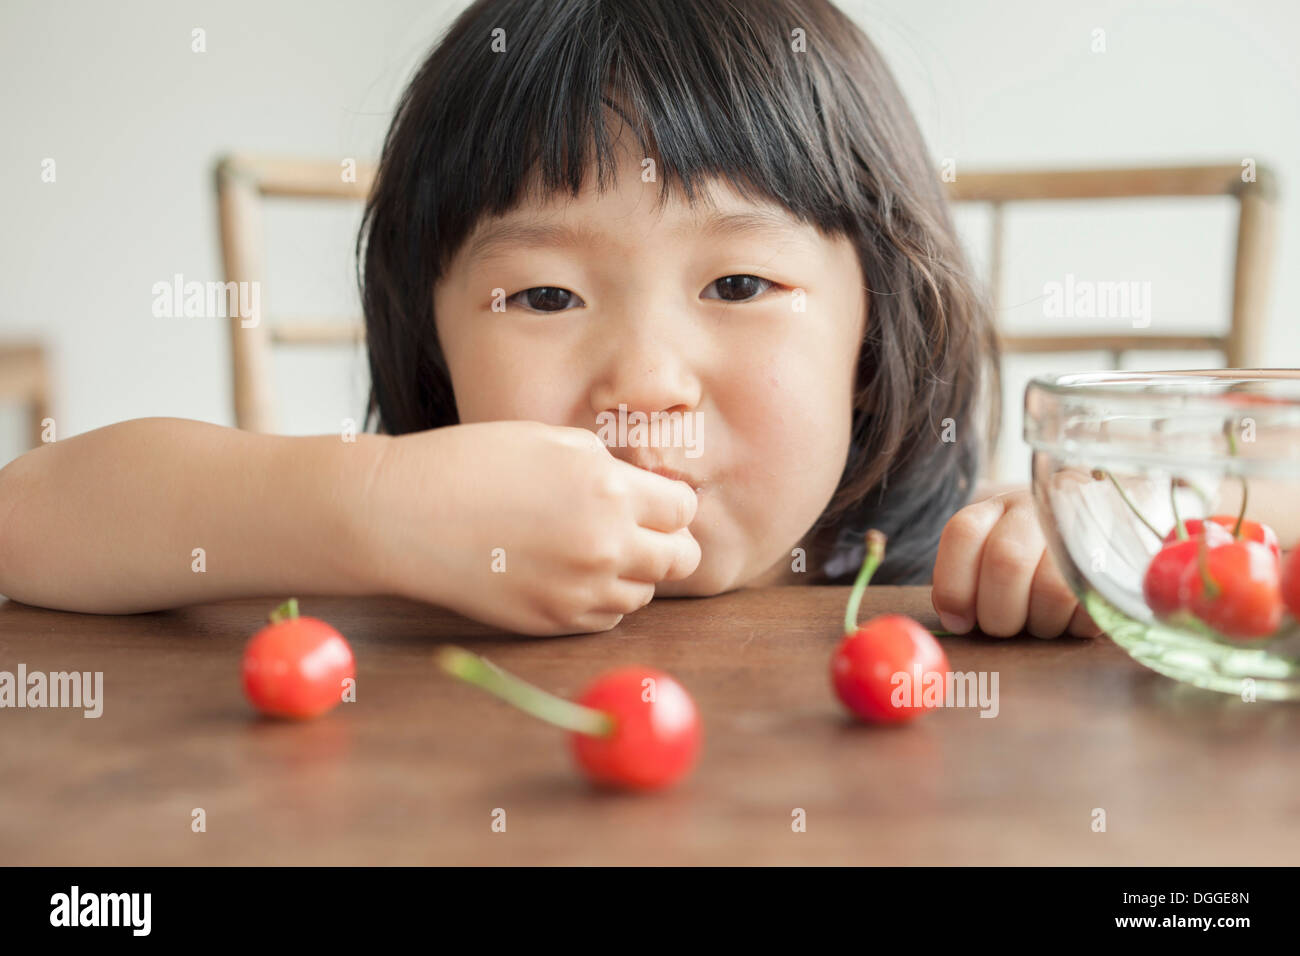 Girl eating cherries, portrait Stock Photo